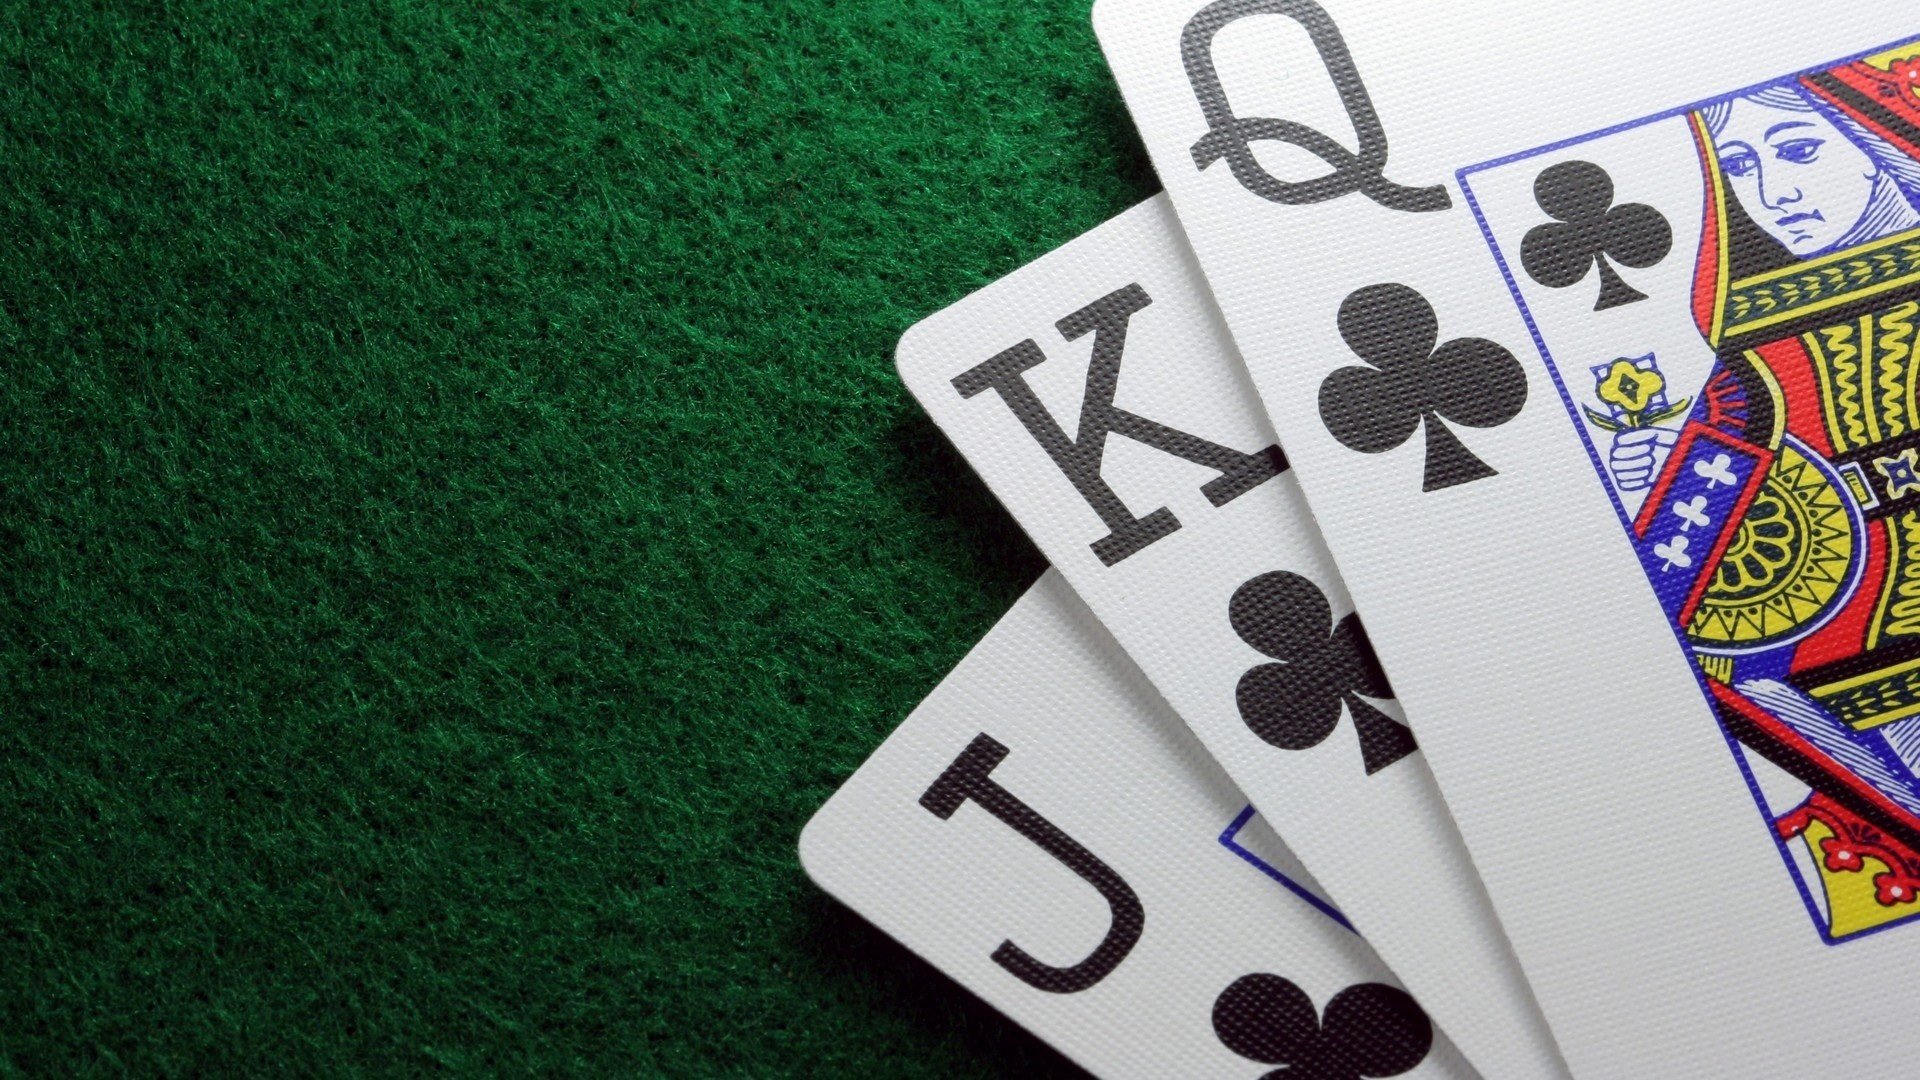 king card hd wallpaper,games,poker,gambling,card game,casino